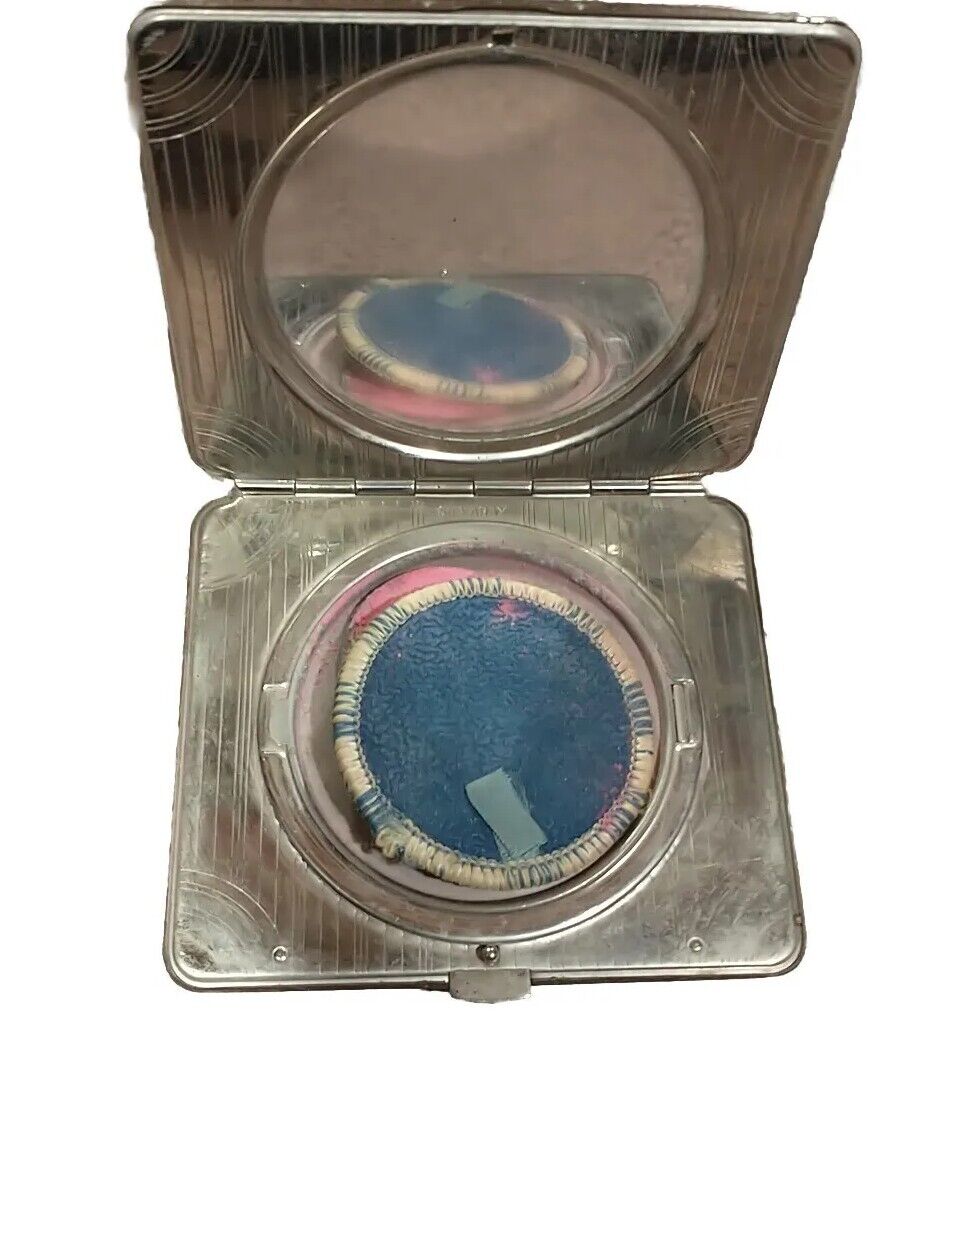 Atq Silvaray Powder Rouge Compact Mirror Painted Green Enamel USA Made Rare